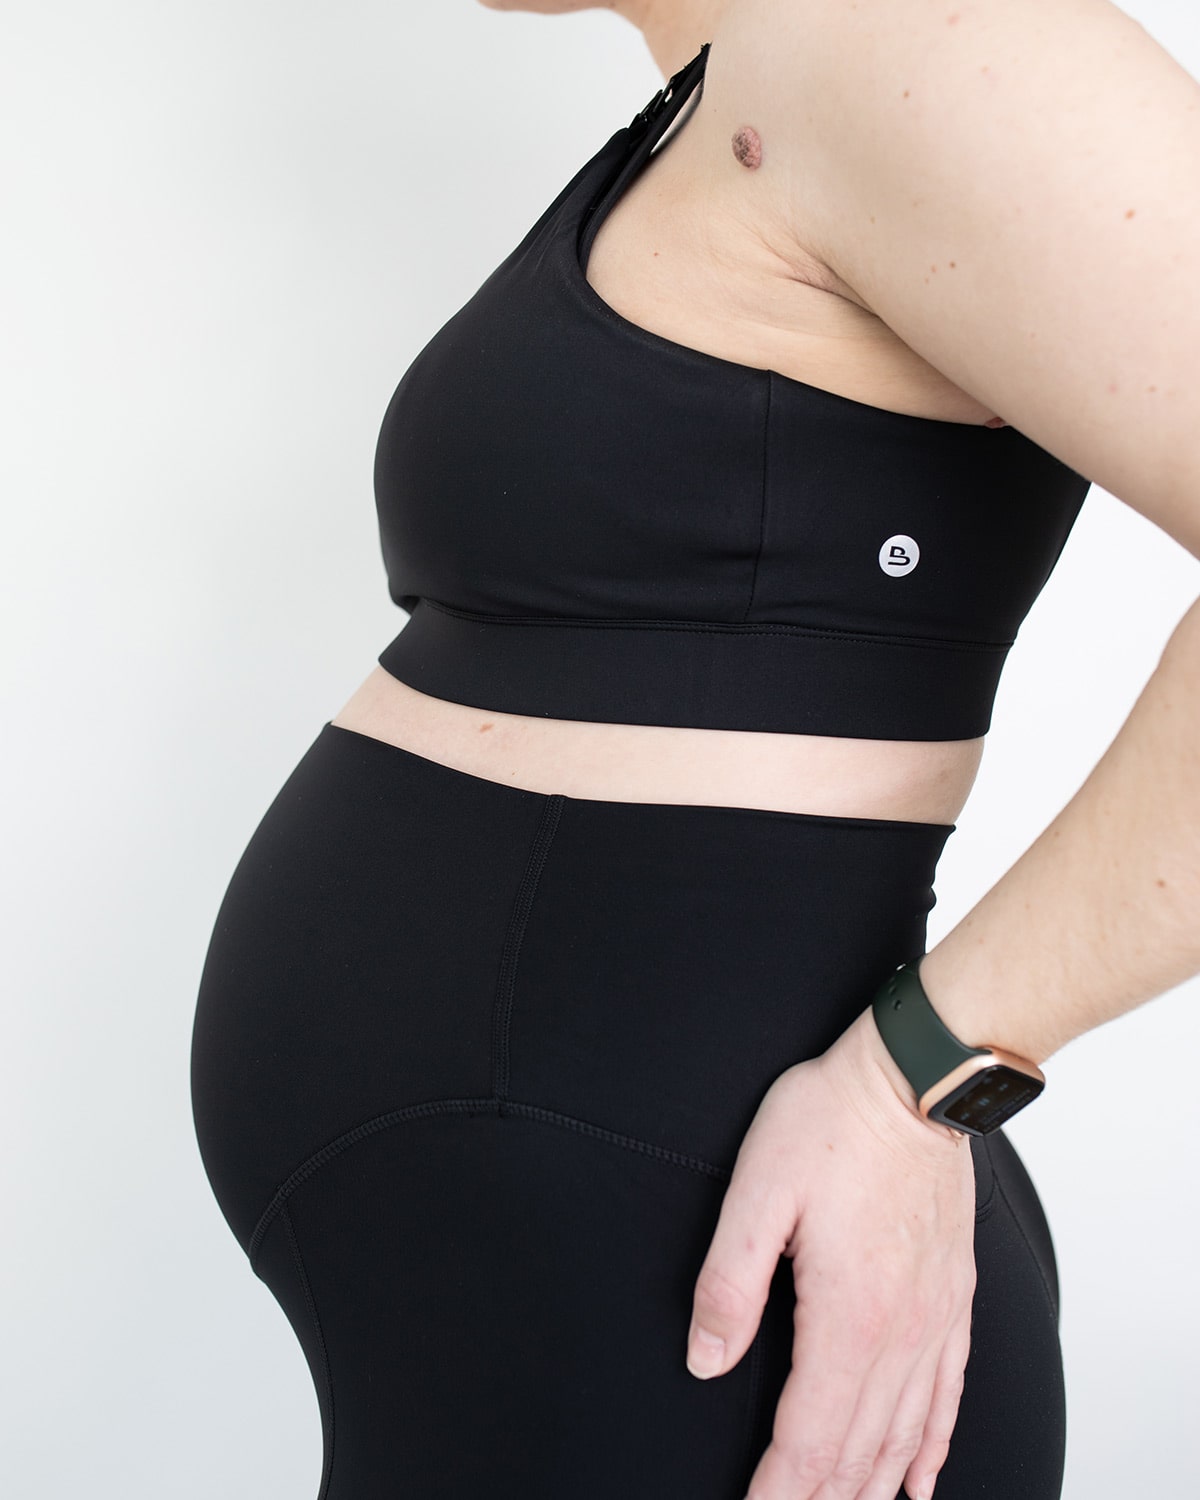 Maternity Leggings, Activewear & Nursing Bras